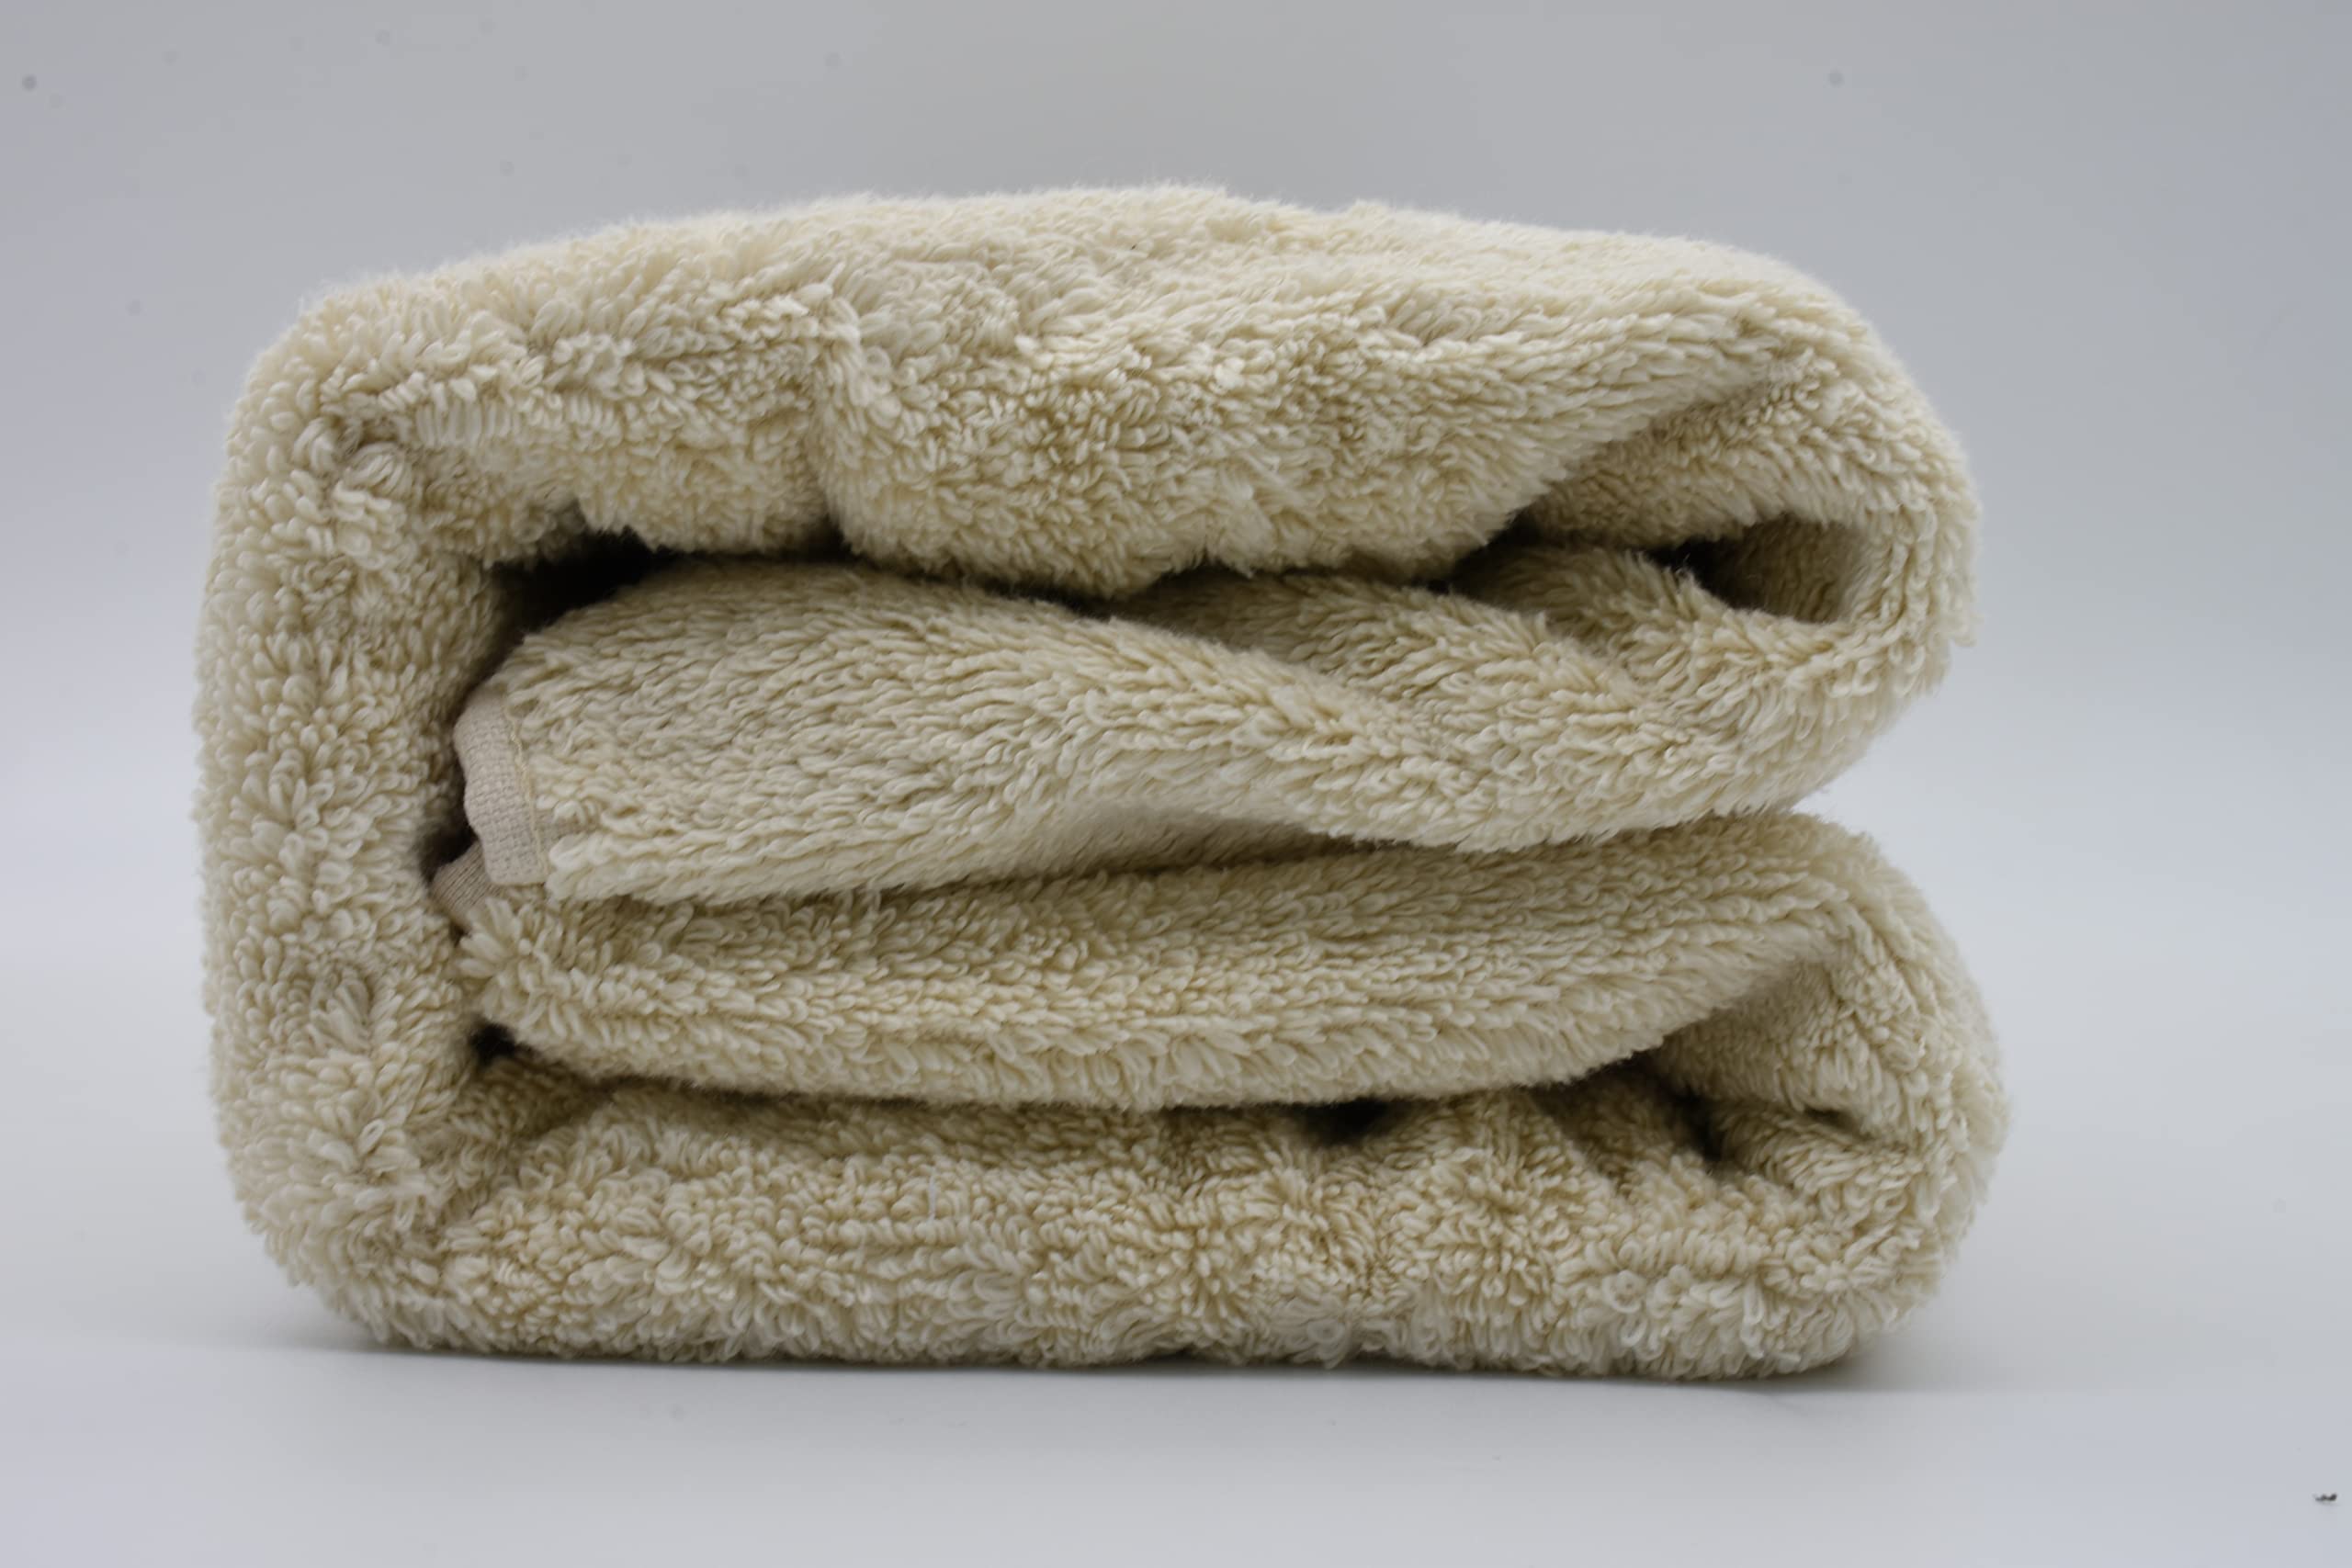 Pierre Donna Bath Towel, Highly Absorbent (Beige)